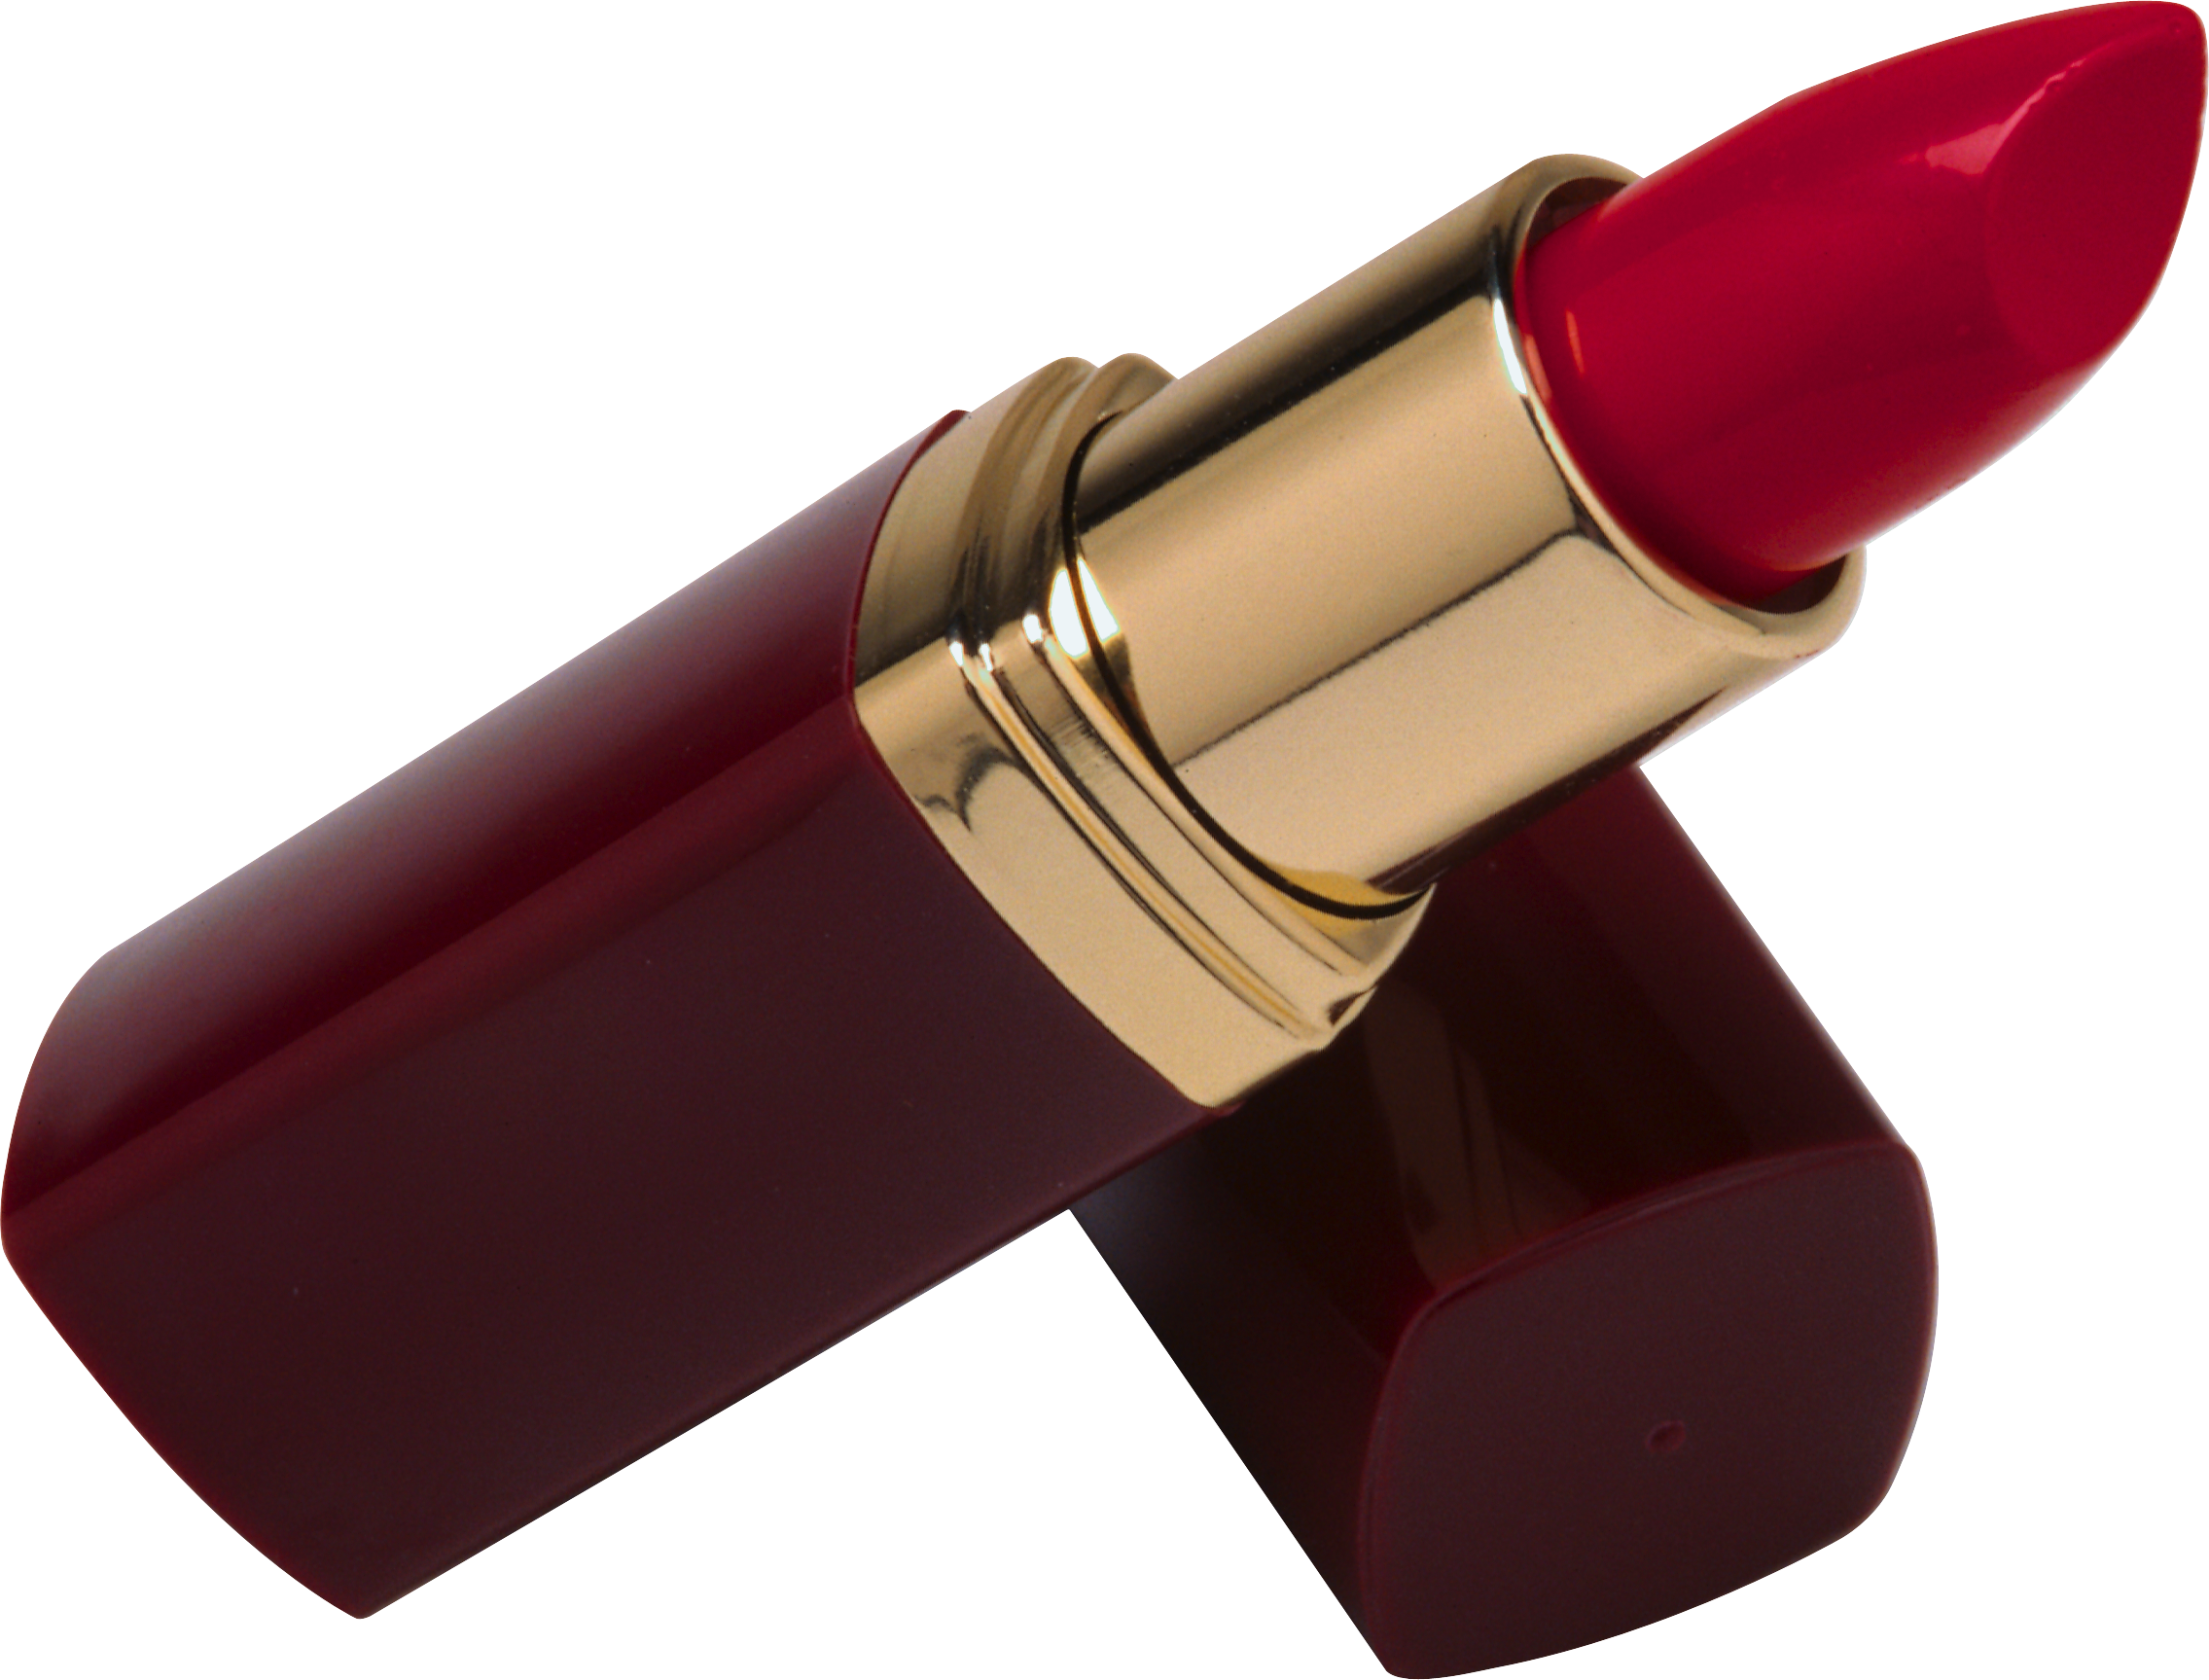 Makeup Lipsticks Background PNG Image